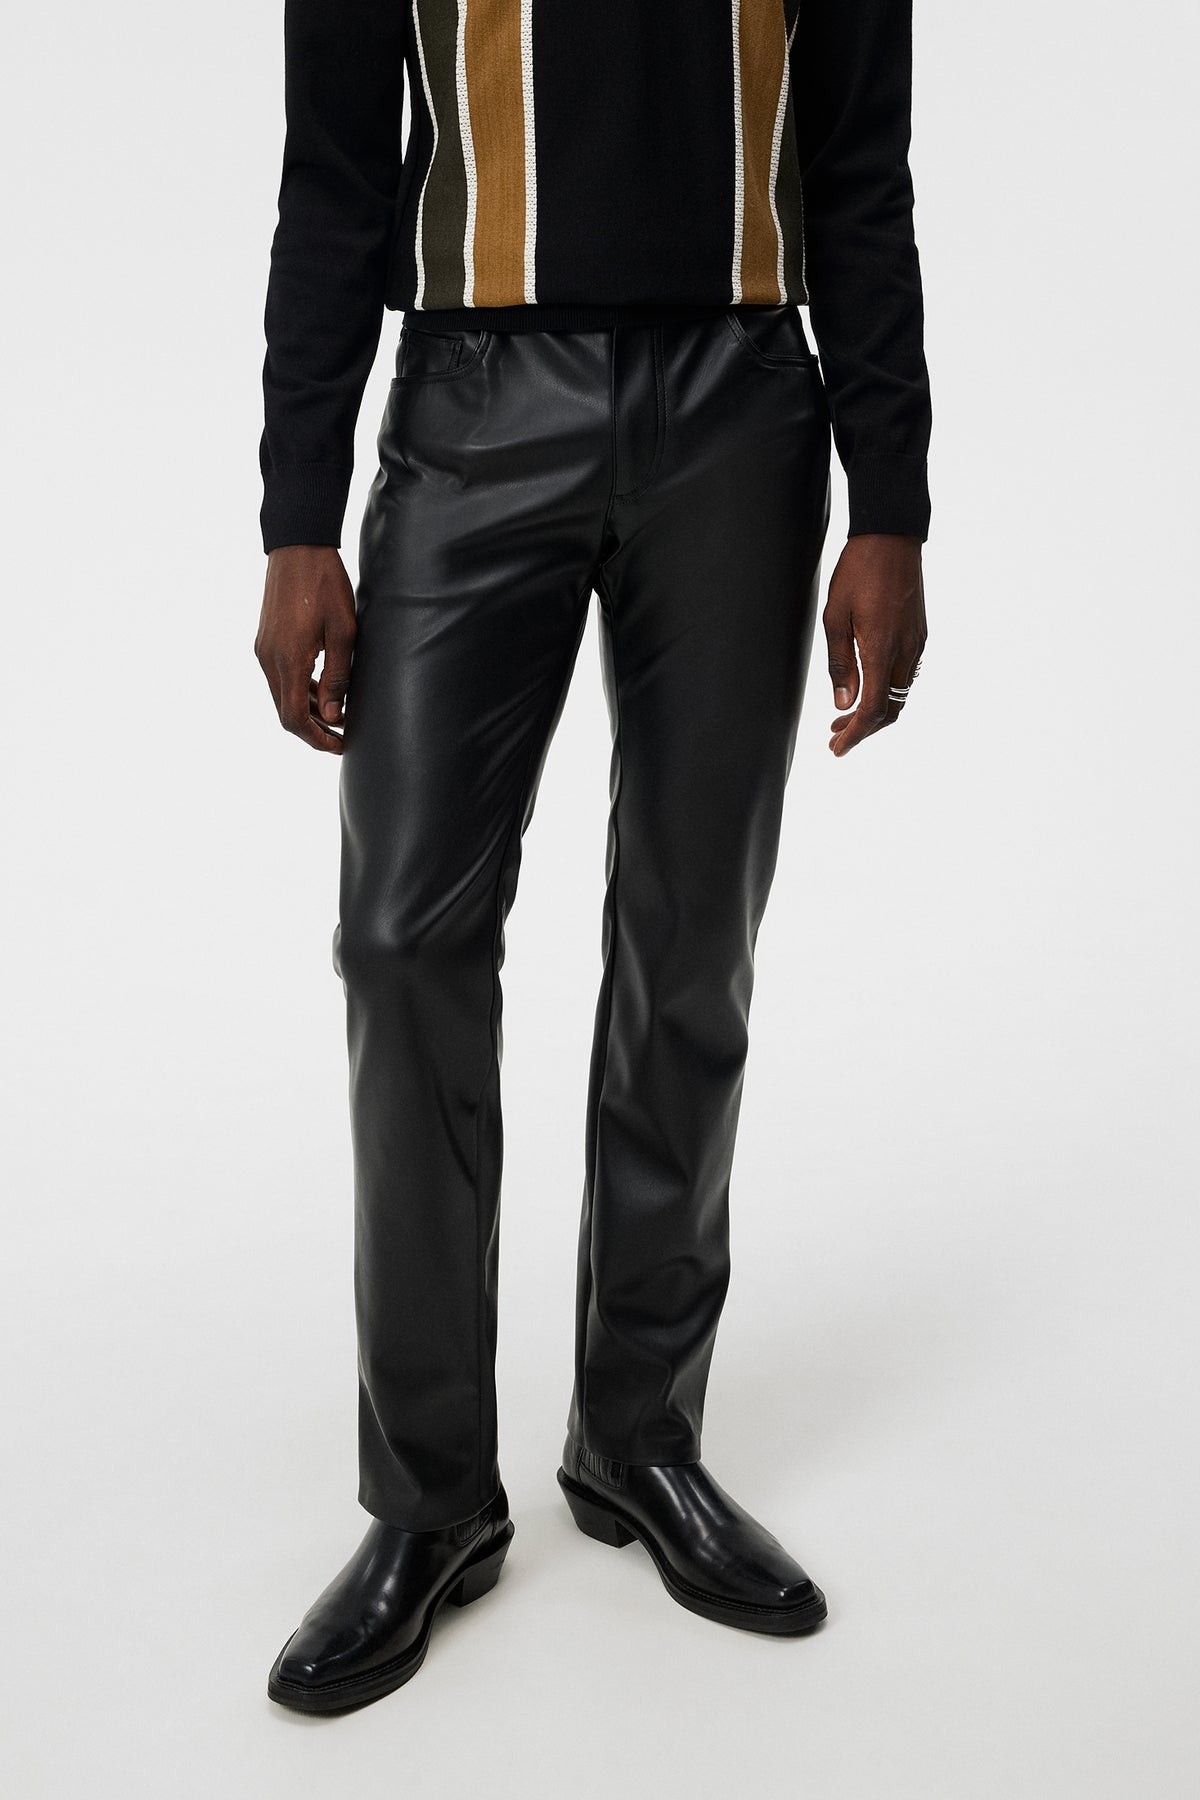 Garcia Leather Pants / Black –